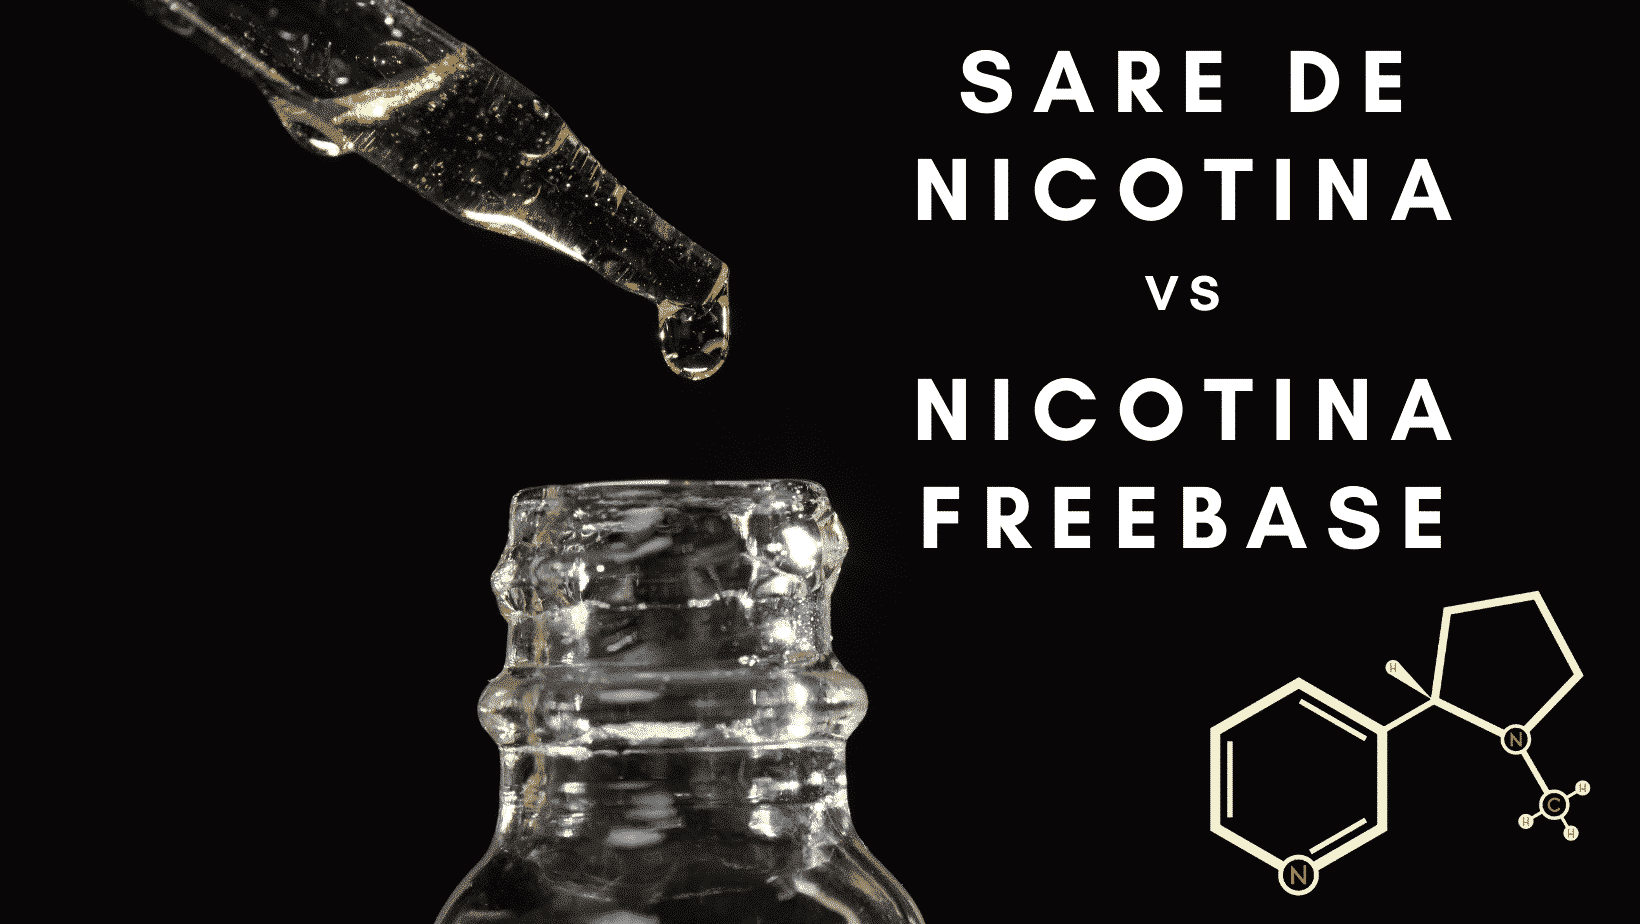 Care este diferenta dintre Sare de nicotina si nicotina freebase